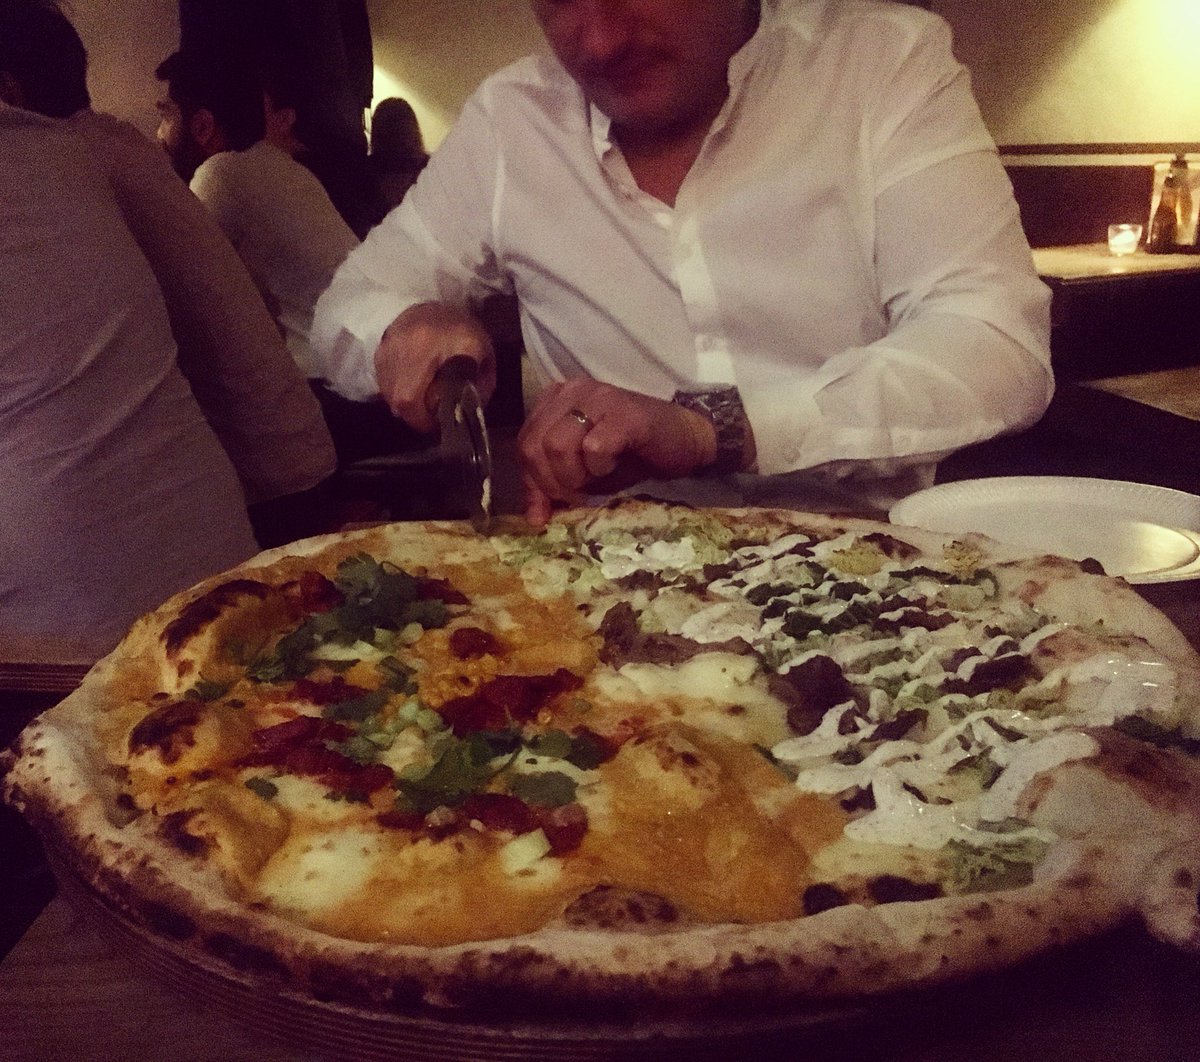 Beyond amazing Pizza at @homesliceLDN, Husband left in for scale 🍕 #Pizza #Husband #LondonDining #HomeSlice #LDN #HalfandHalf #GiantPizza #QualityAndQuantity